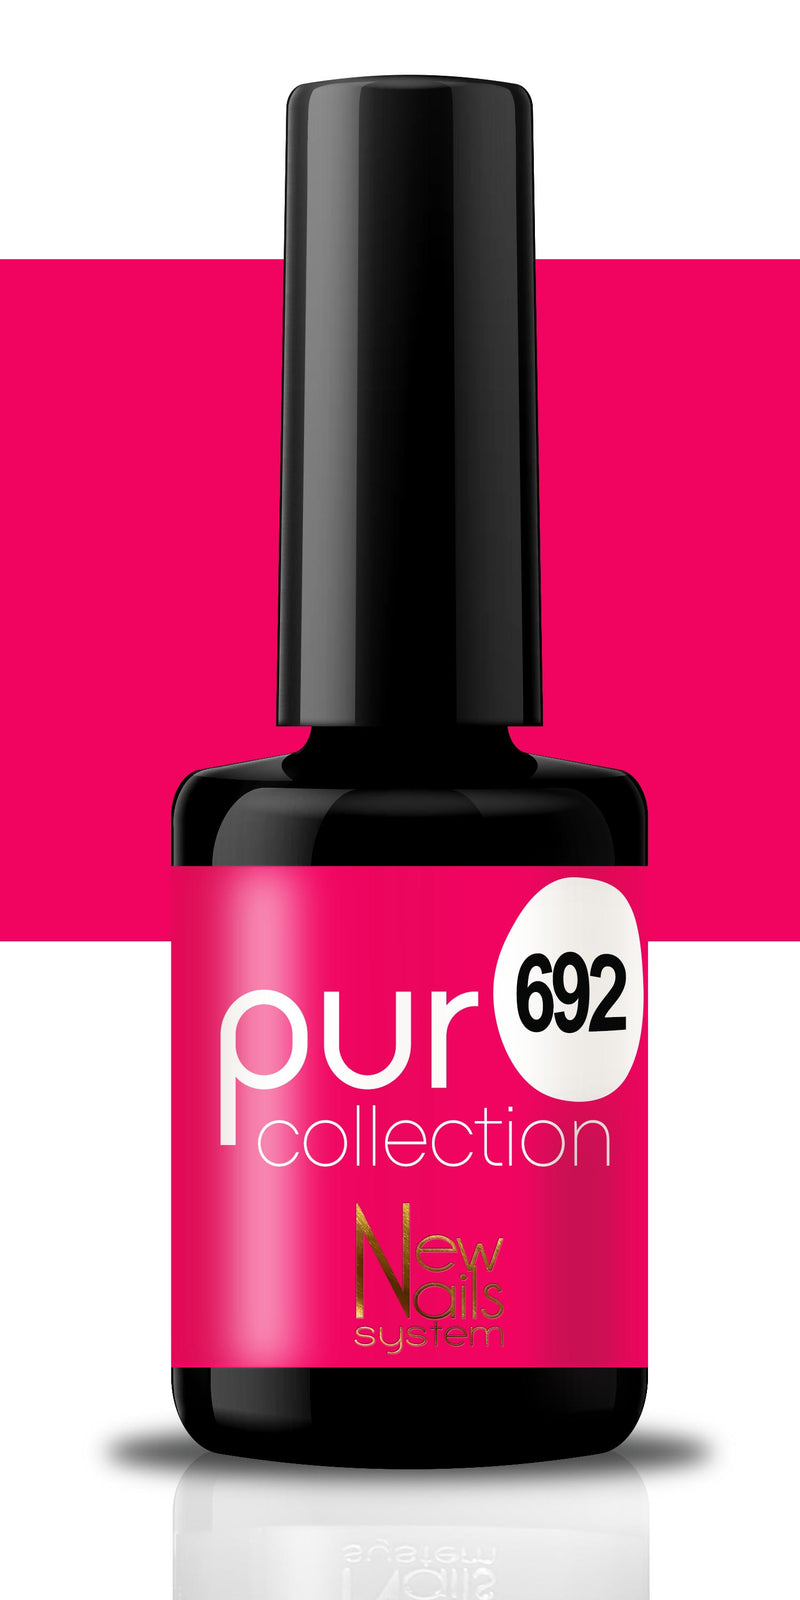 Puro collection Popart 692 polish gel 5ml